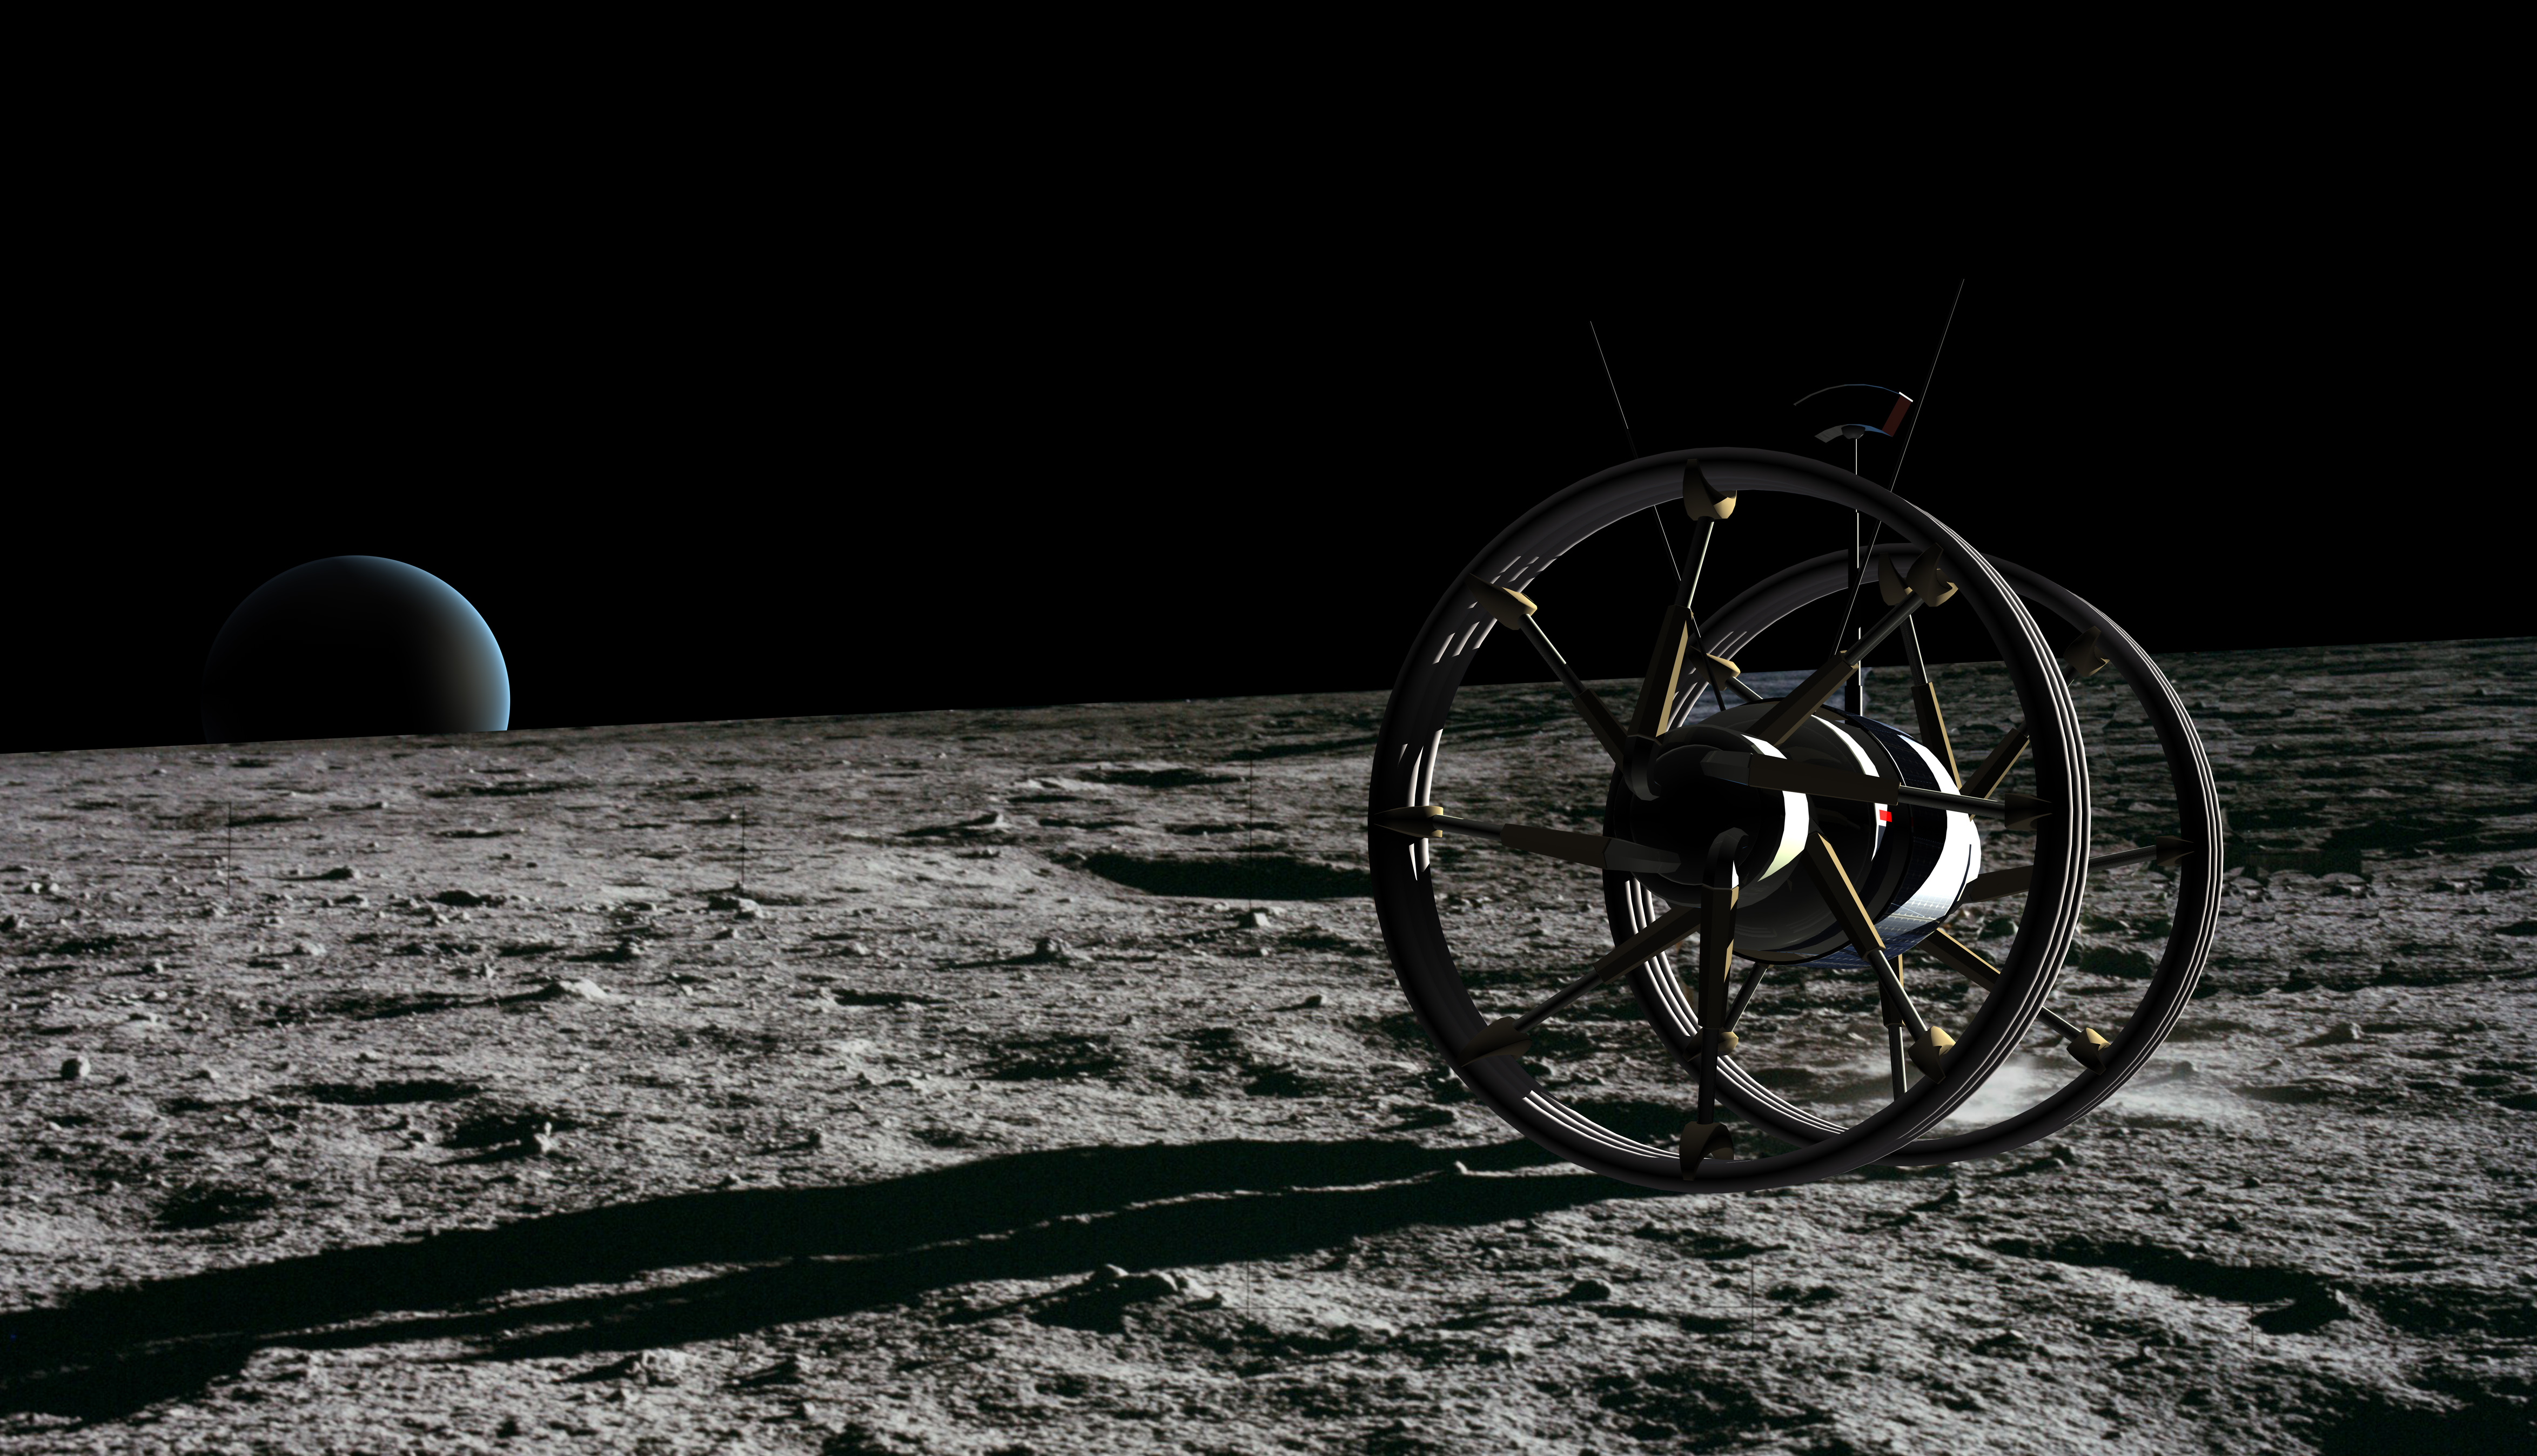 c-rove Moon Rover Vehicle Objekt GLXP Google Lunar Xprice c-base Open moon Openmoon Christian Bennat Projekt Konzept Design Marten Suhr